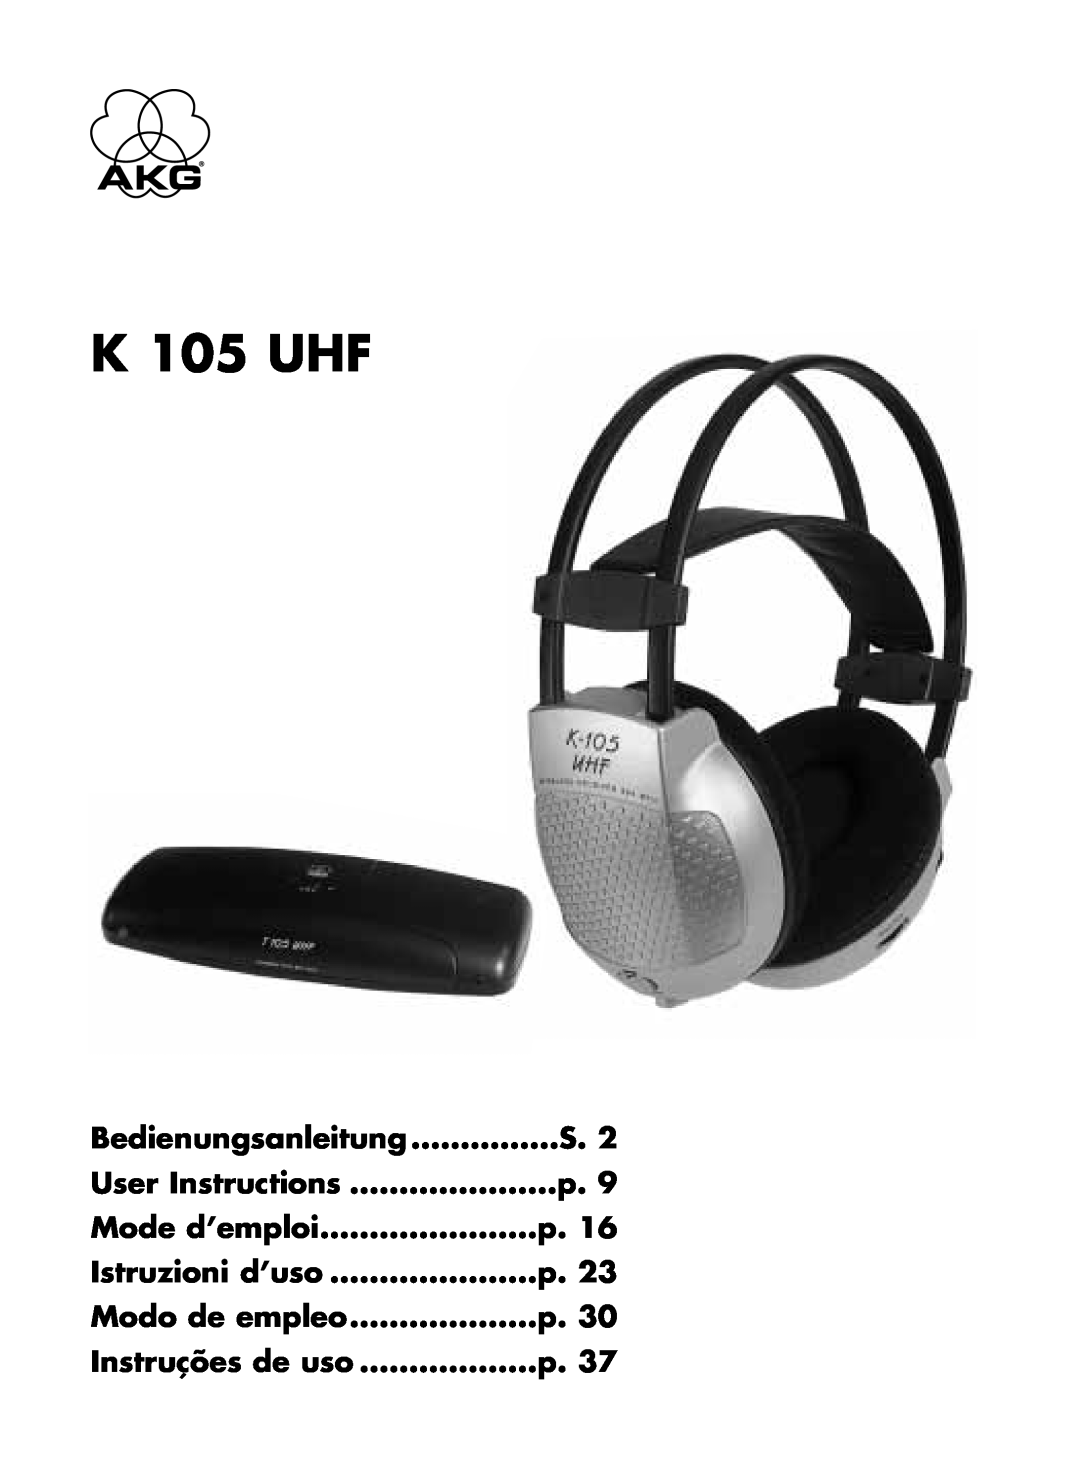 AKG Acoustics K 105 UHF manual User Instructions, Bedienungsanleitung, Mode d’emploi, Istruzioni d’uso, Modo de empleo 